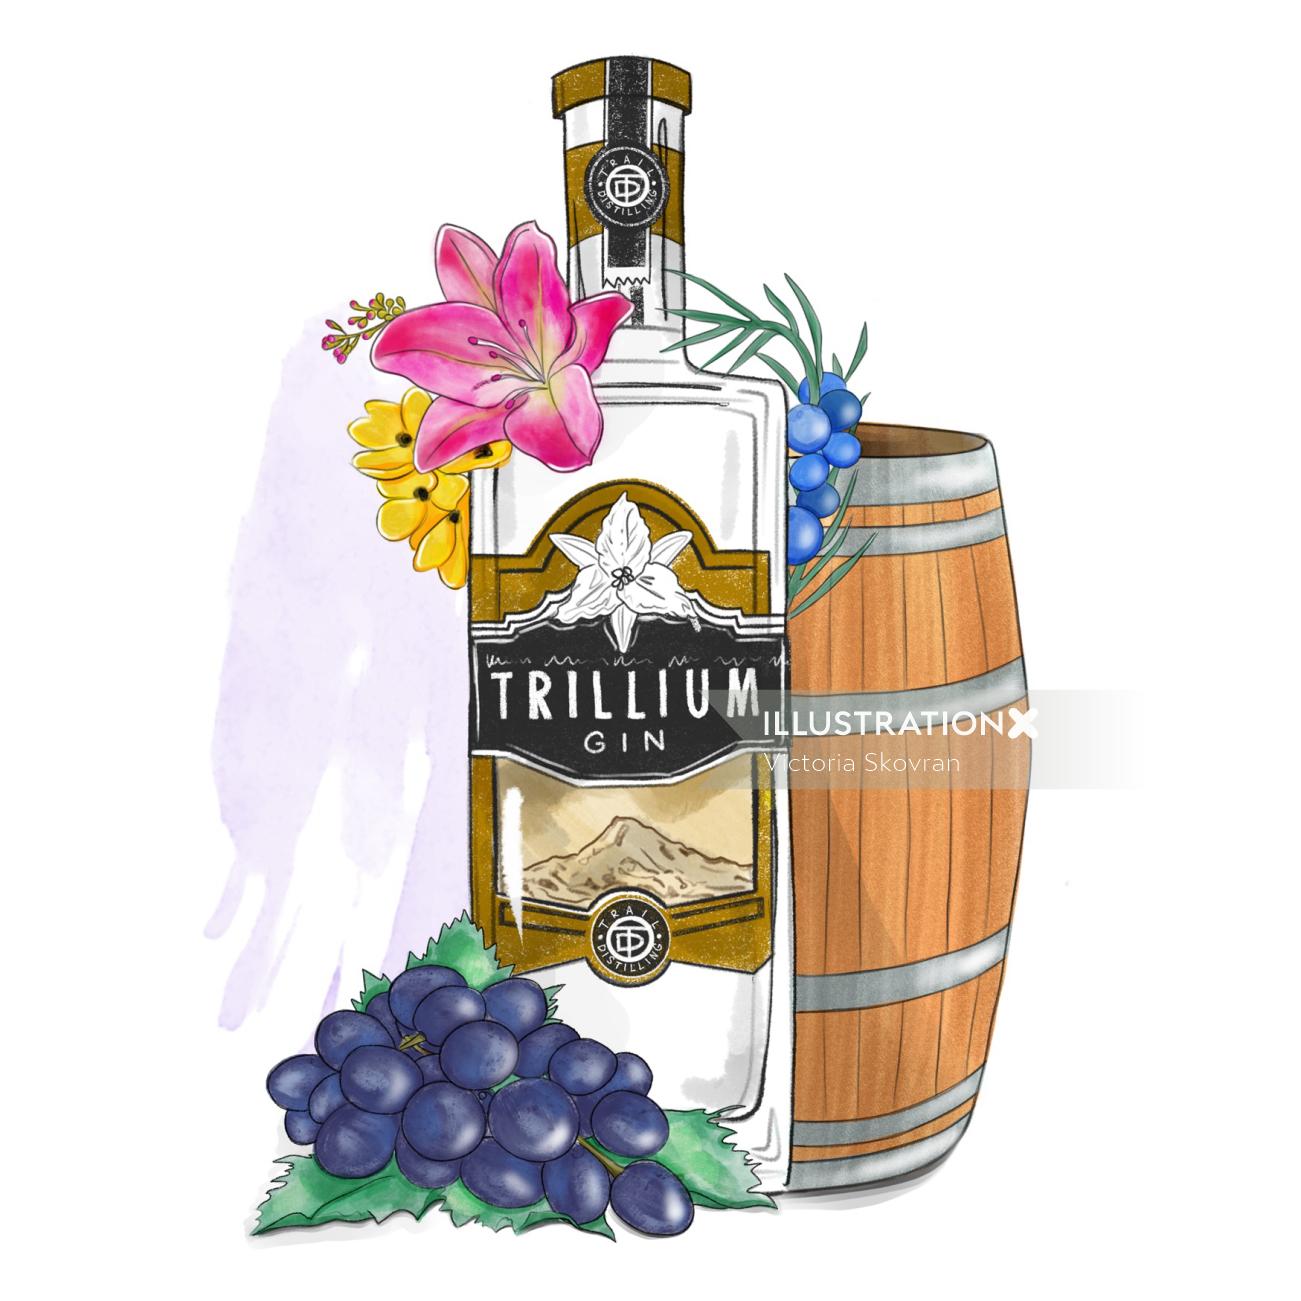 Food & Drinks Trillium bottle with barrel
